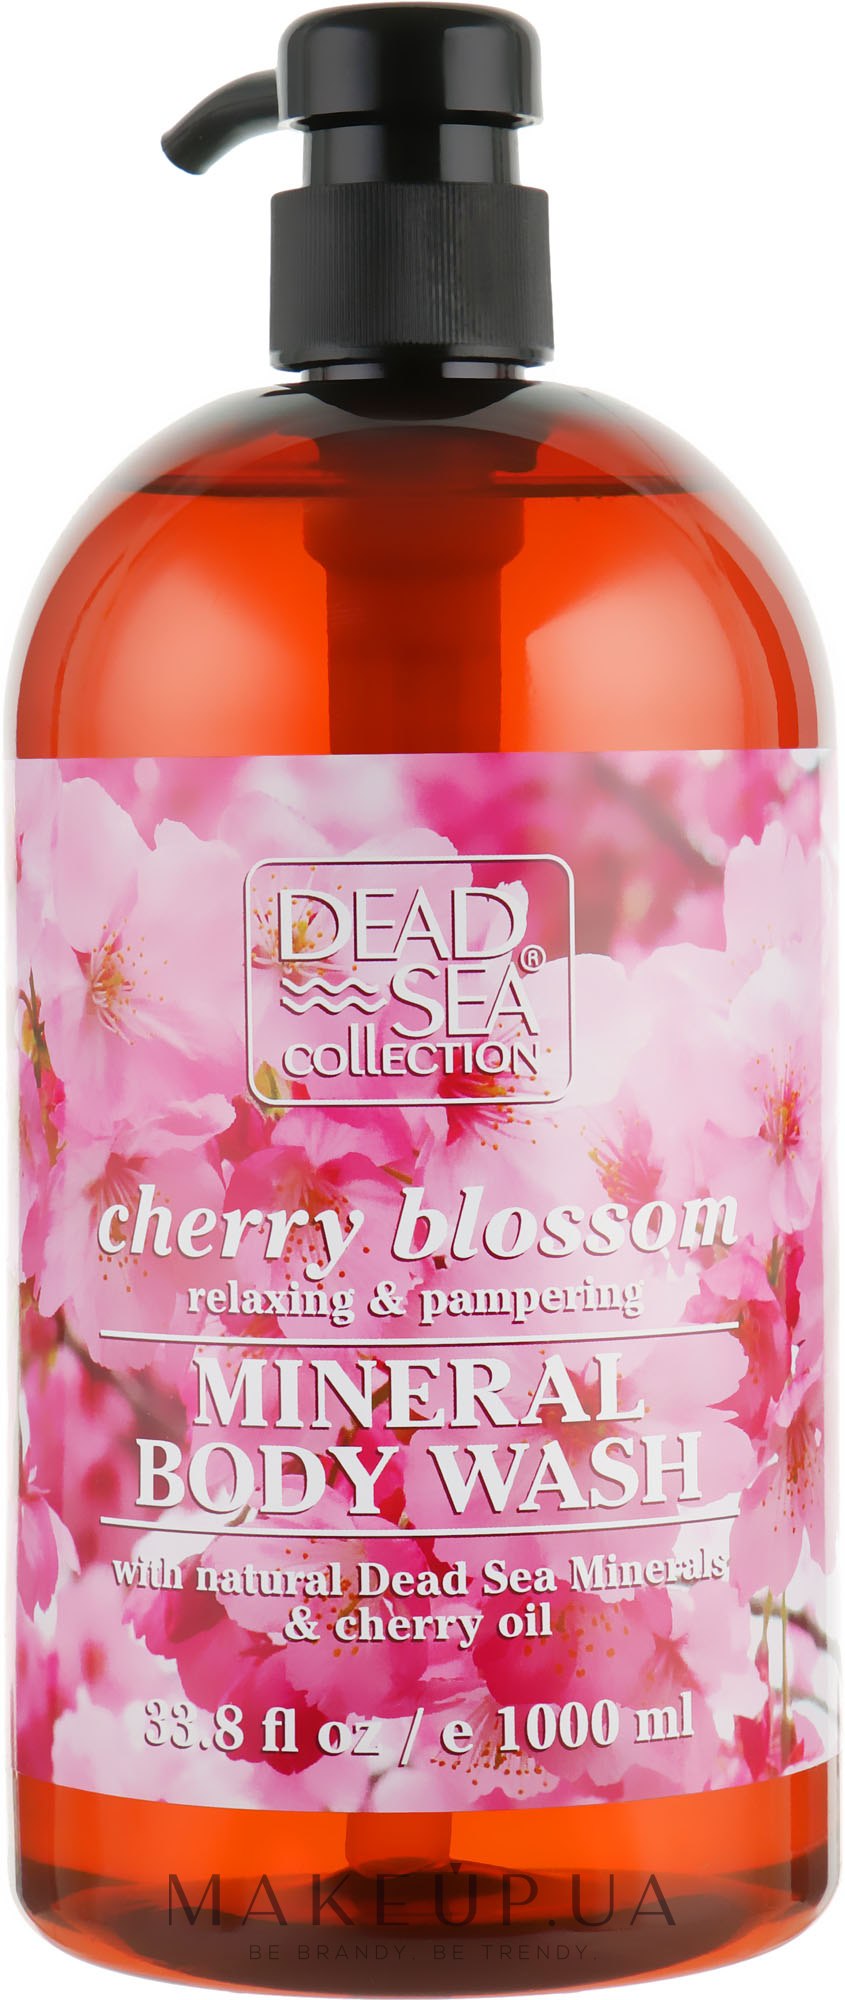 Гель для душа с ароматом цветов вишни - Dead Sea Collection Cherry Blossom Body Wash — фото 1000ml